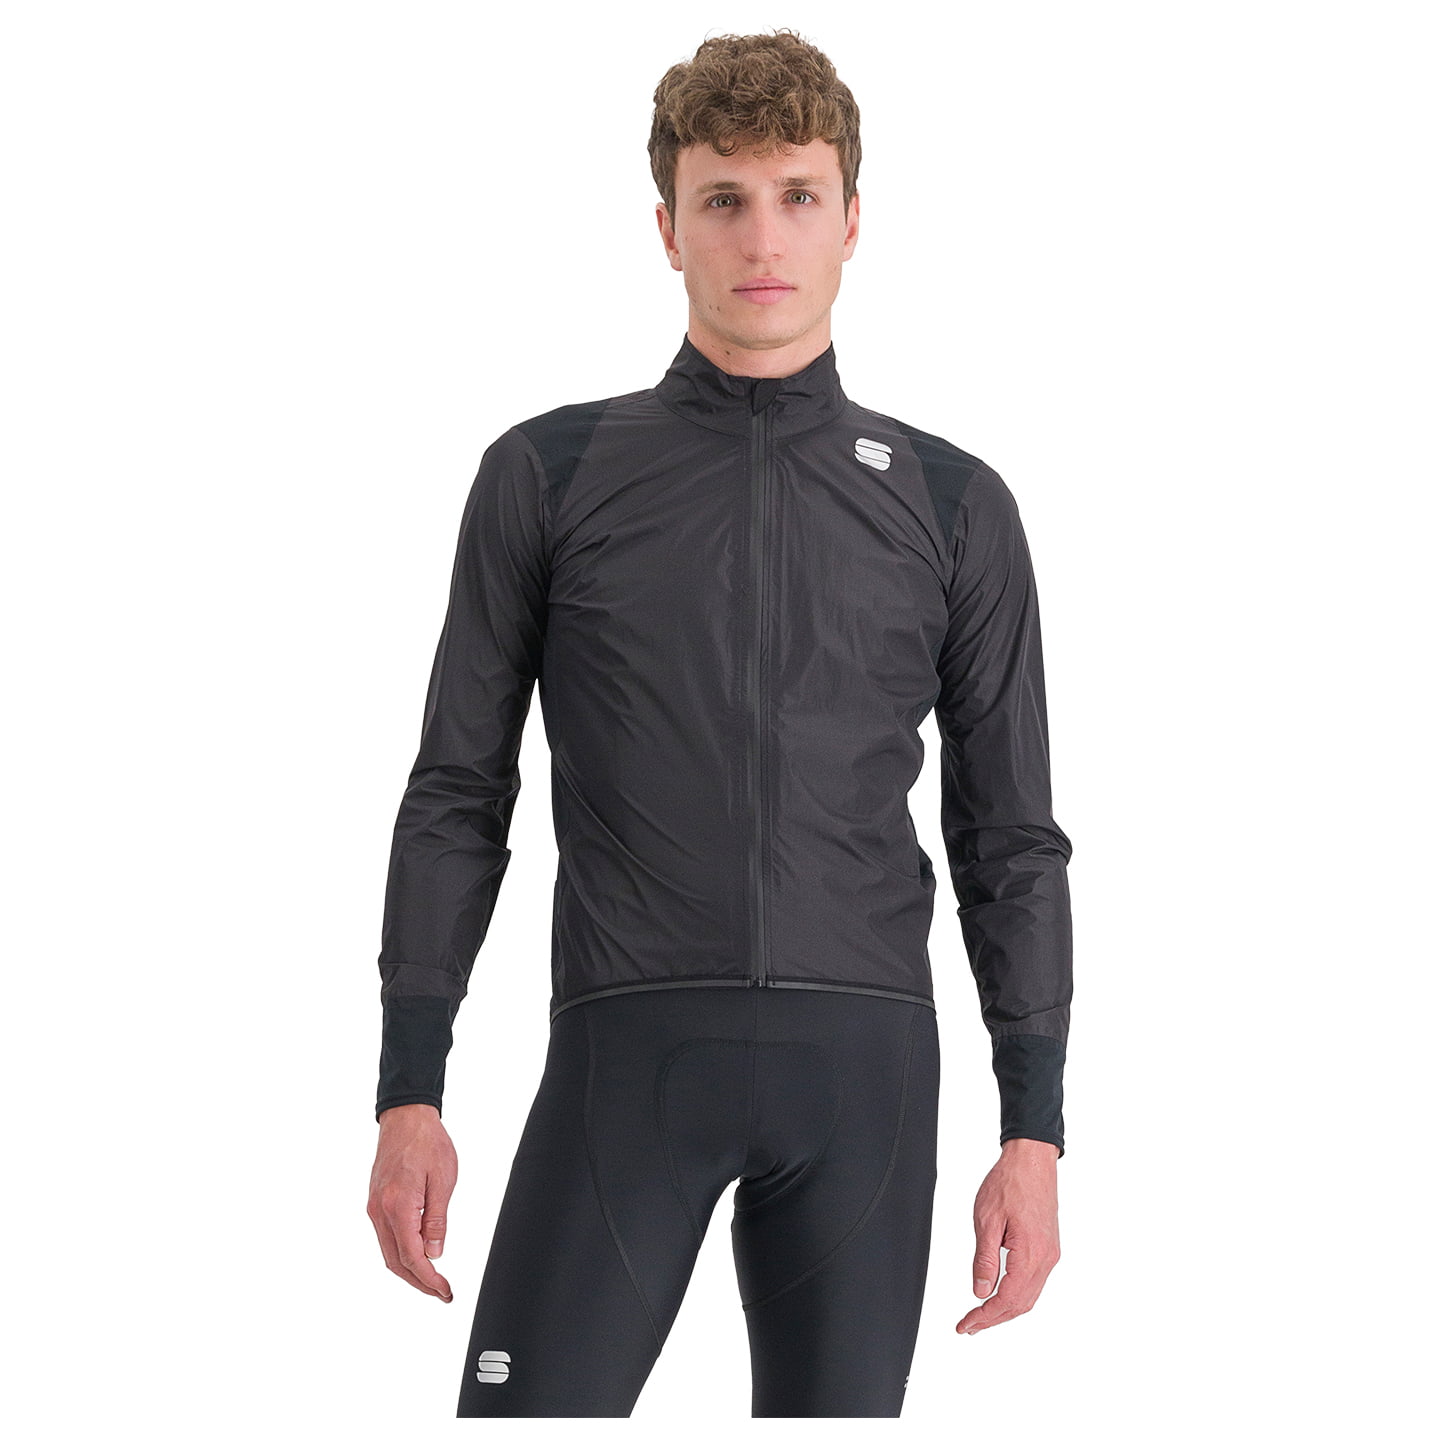 SPORTFUL Rain Jacket Hot Pack No Rain Waterproof Jacket, for men, size 2XL, Cycle jacket, Cycling clothing